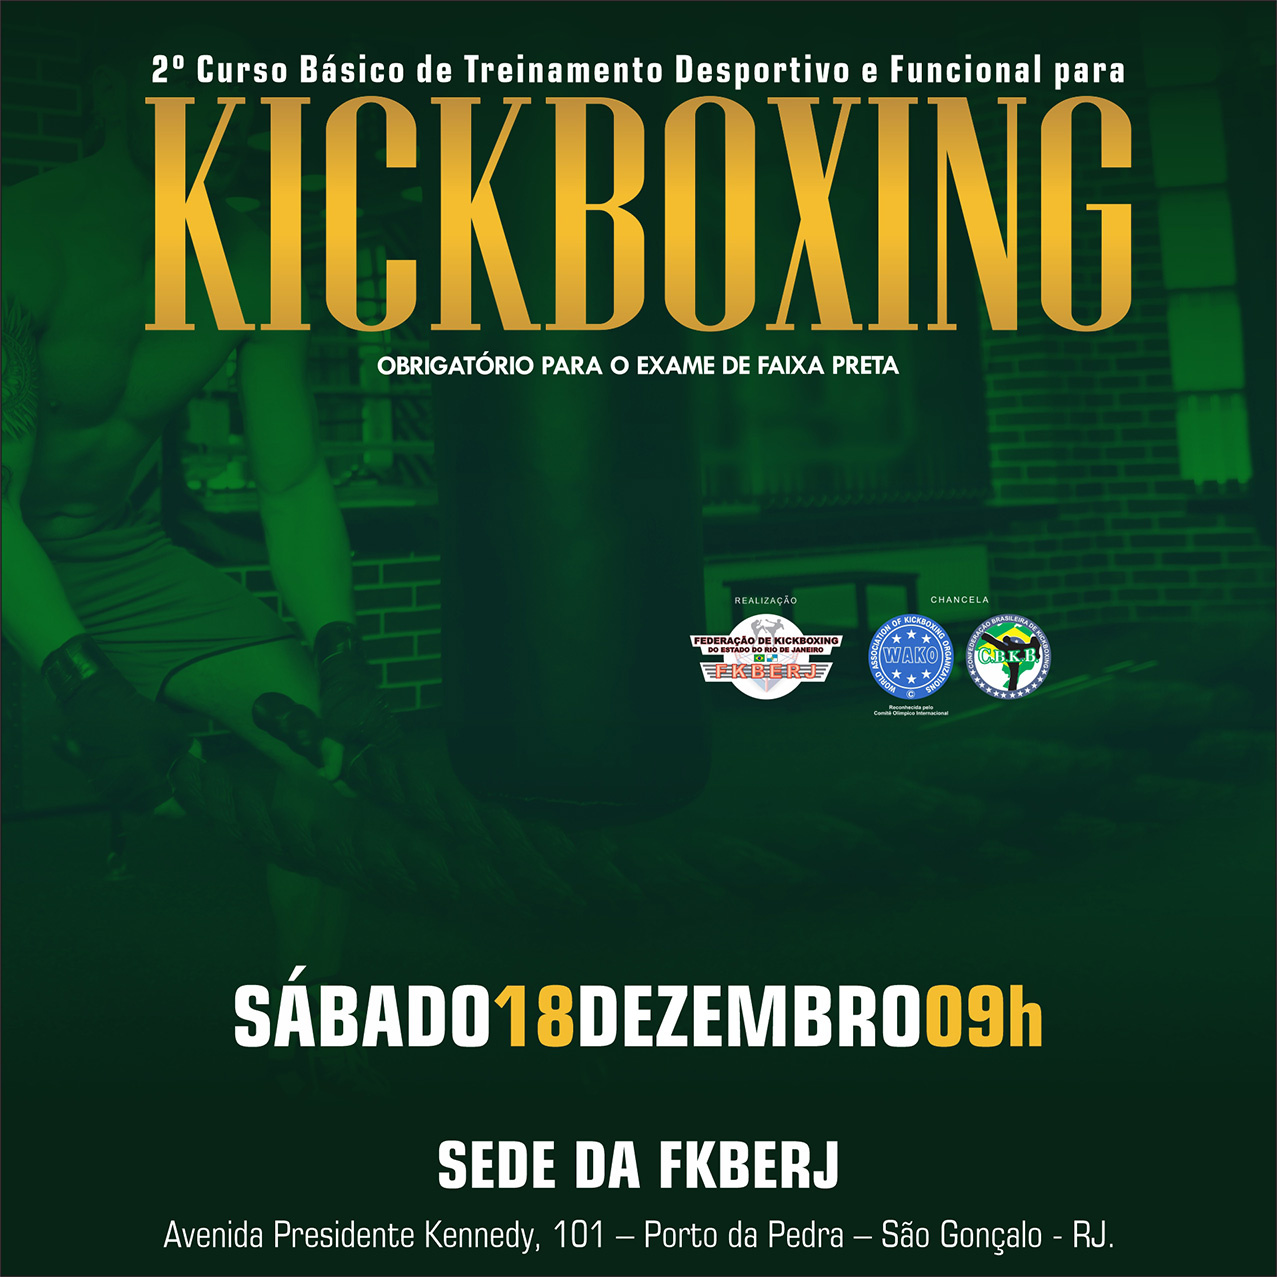 2º Curso básico de treinamento desportivo e técnico funcional para Kickboxing 2021